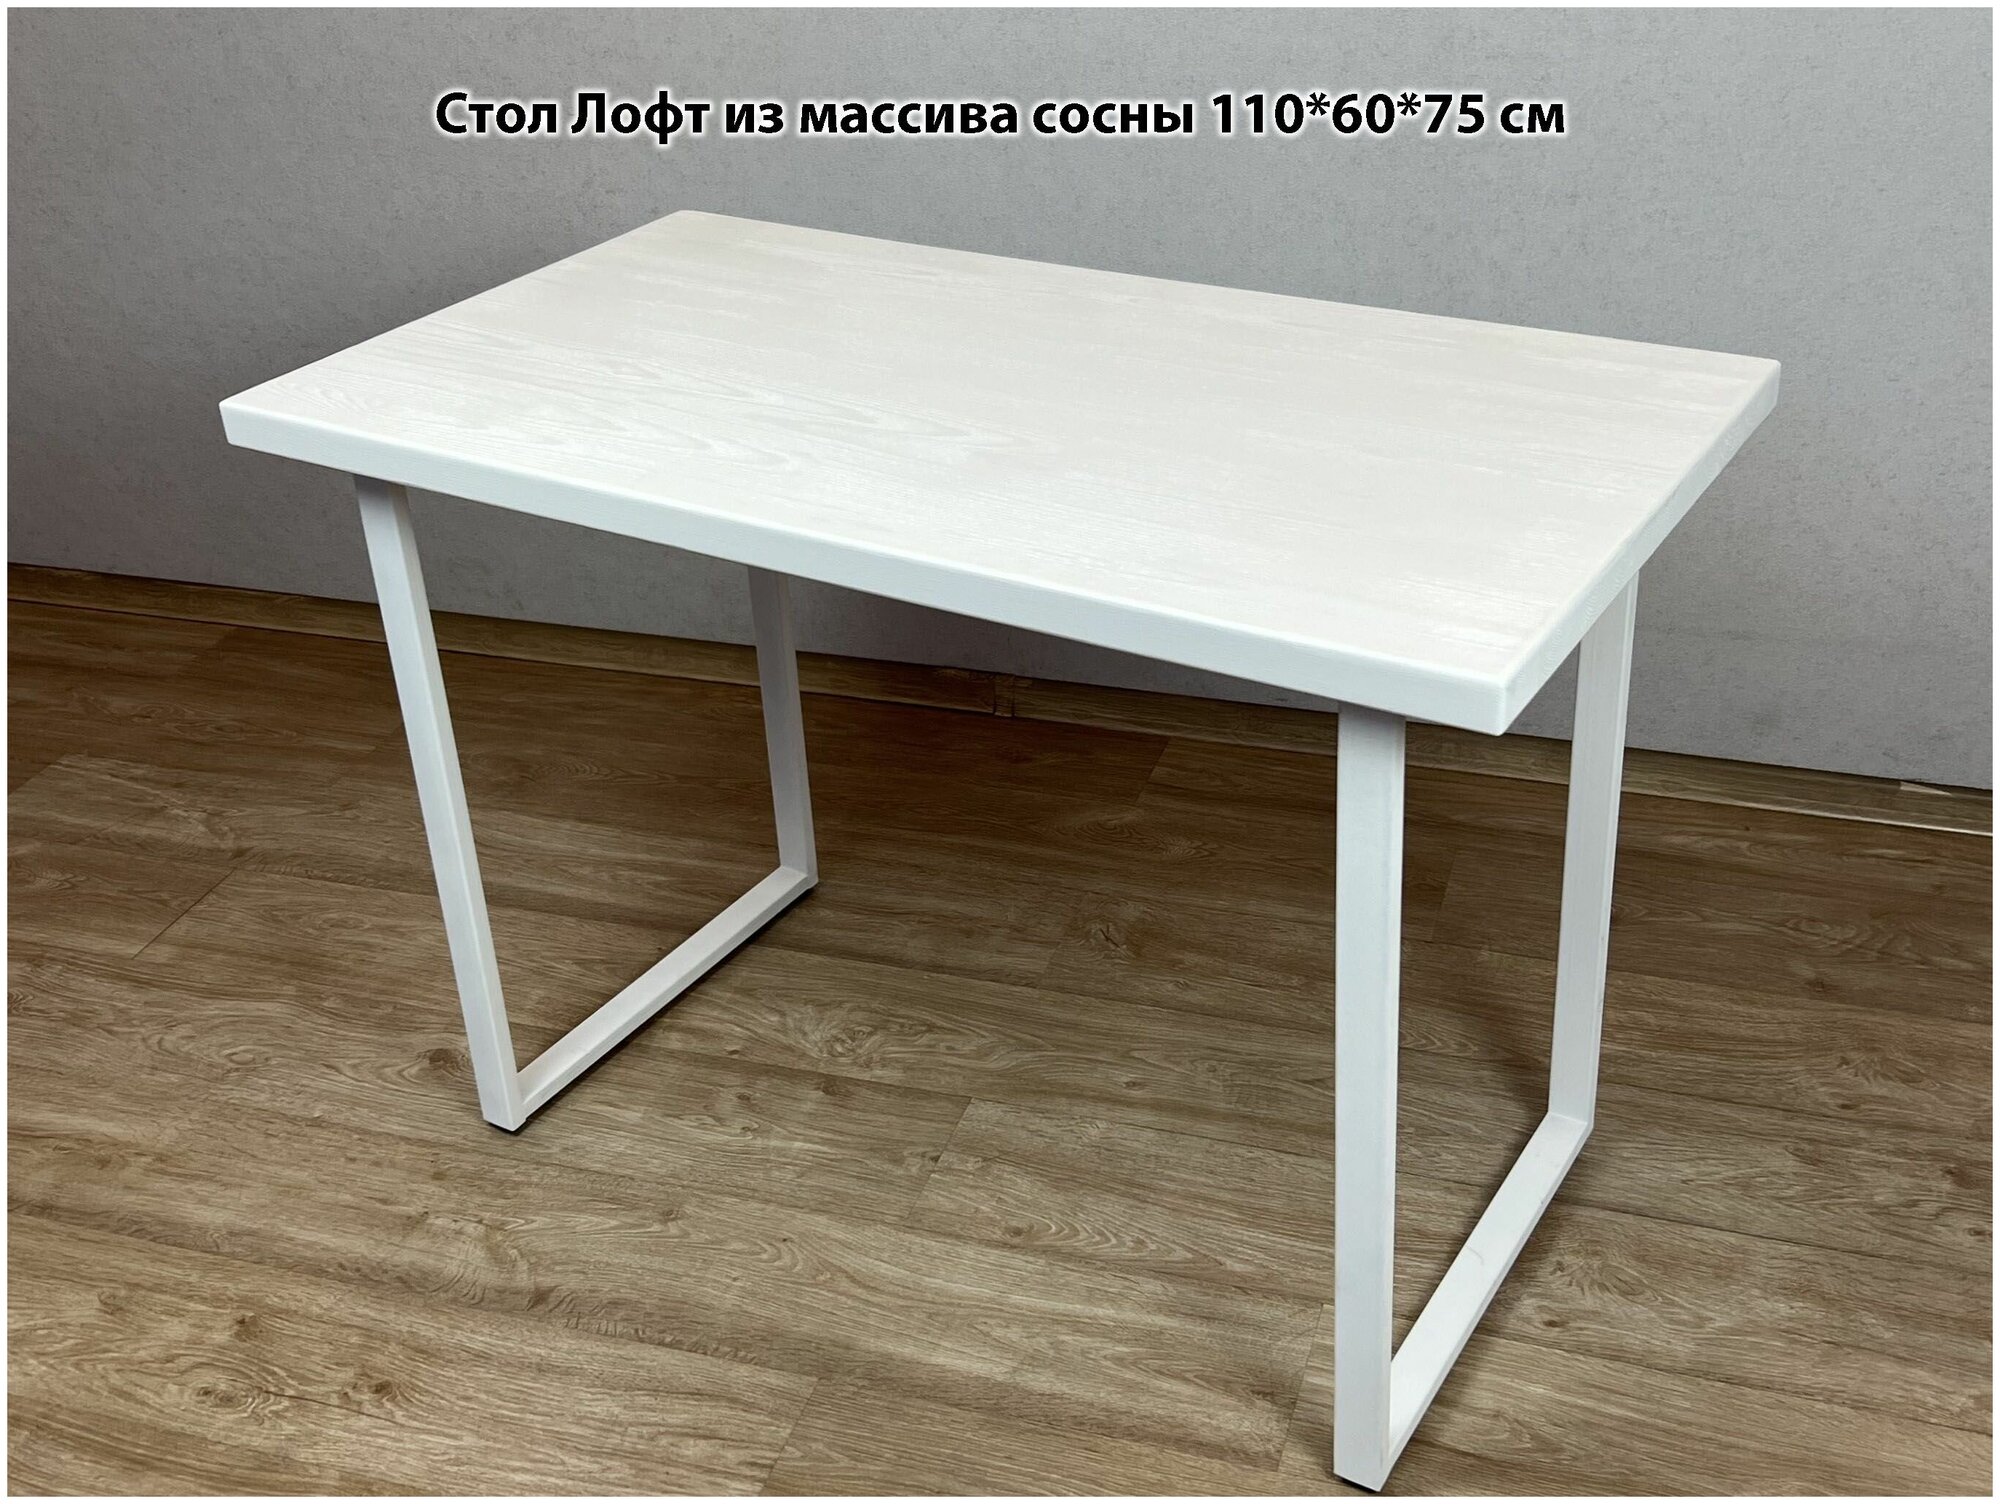 Стол кухонный белый Лофт(Loft) из массива сосны 40 мм 110х60х75 см на белых ножках